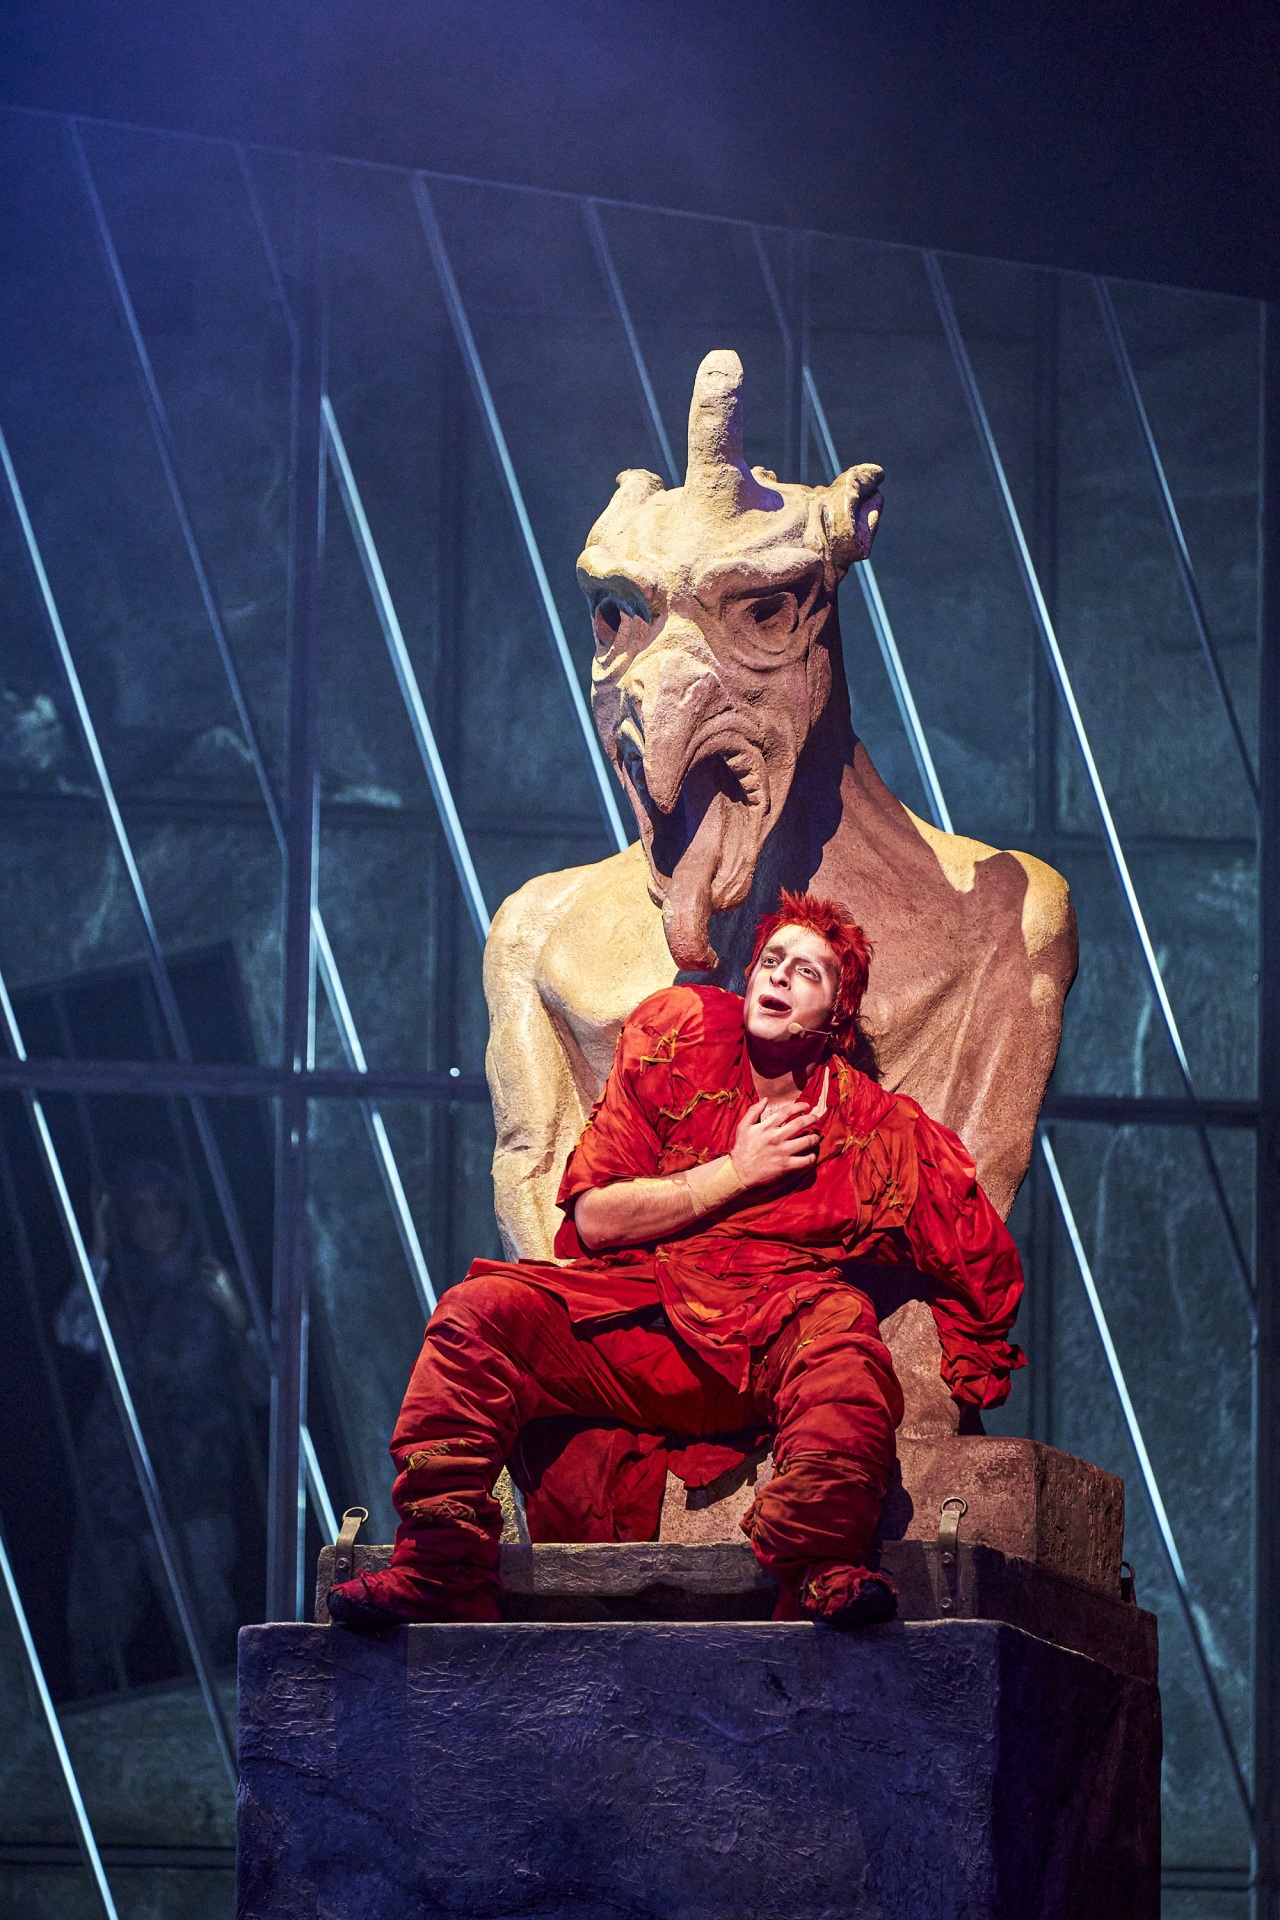 Angelo del Vecchio, who plays the role of Quasimodo, sings “Ou est-elle” onstage. (Mast Entertainment)